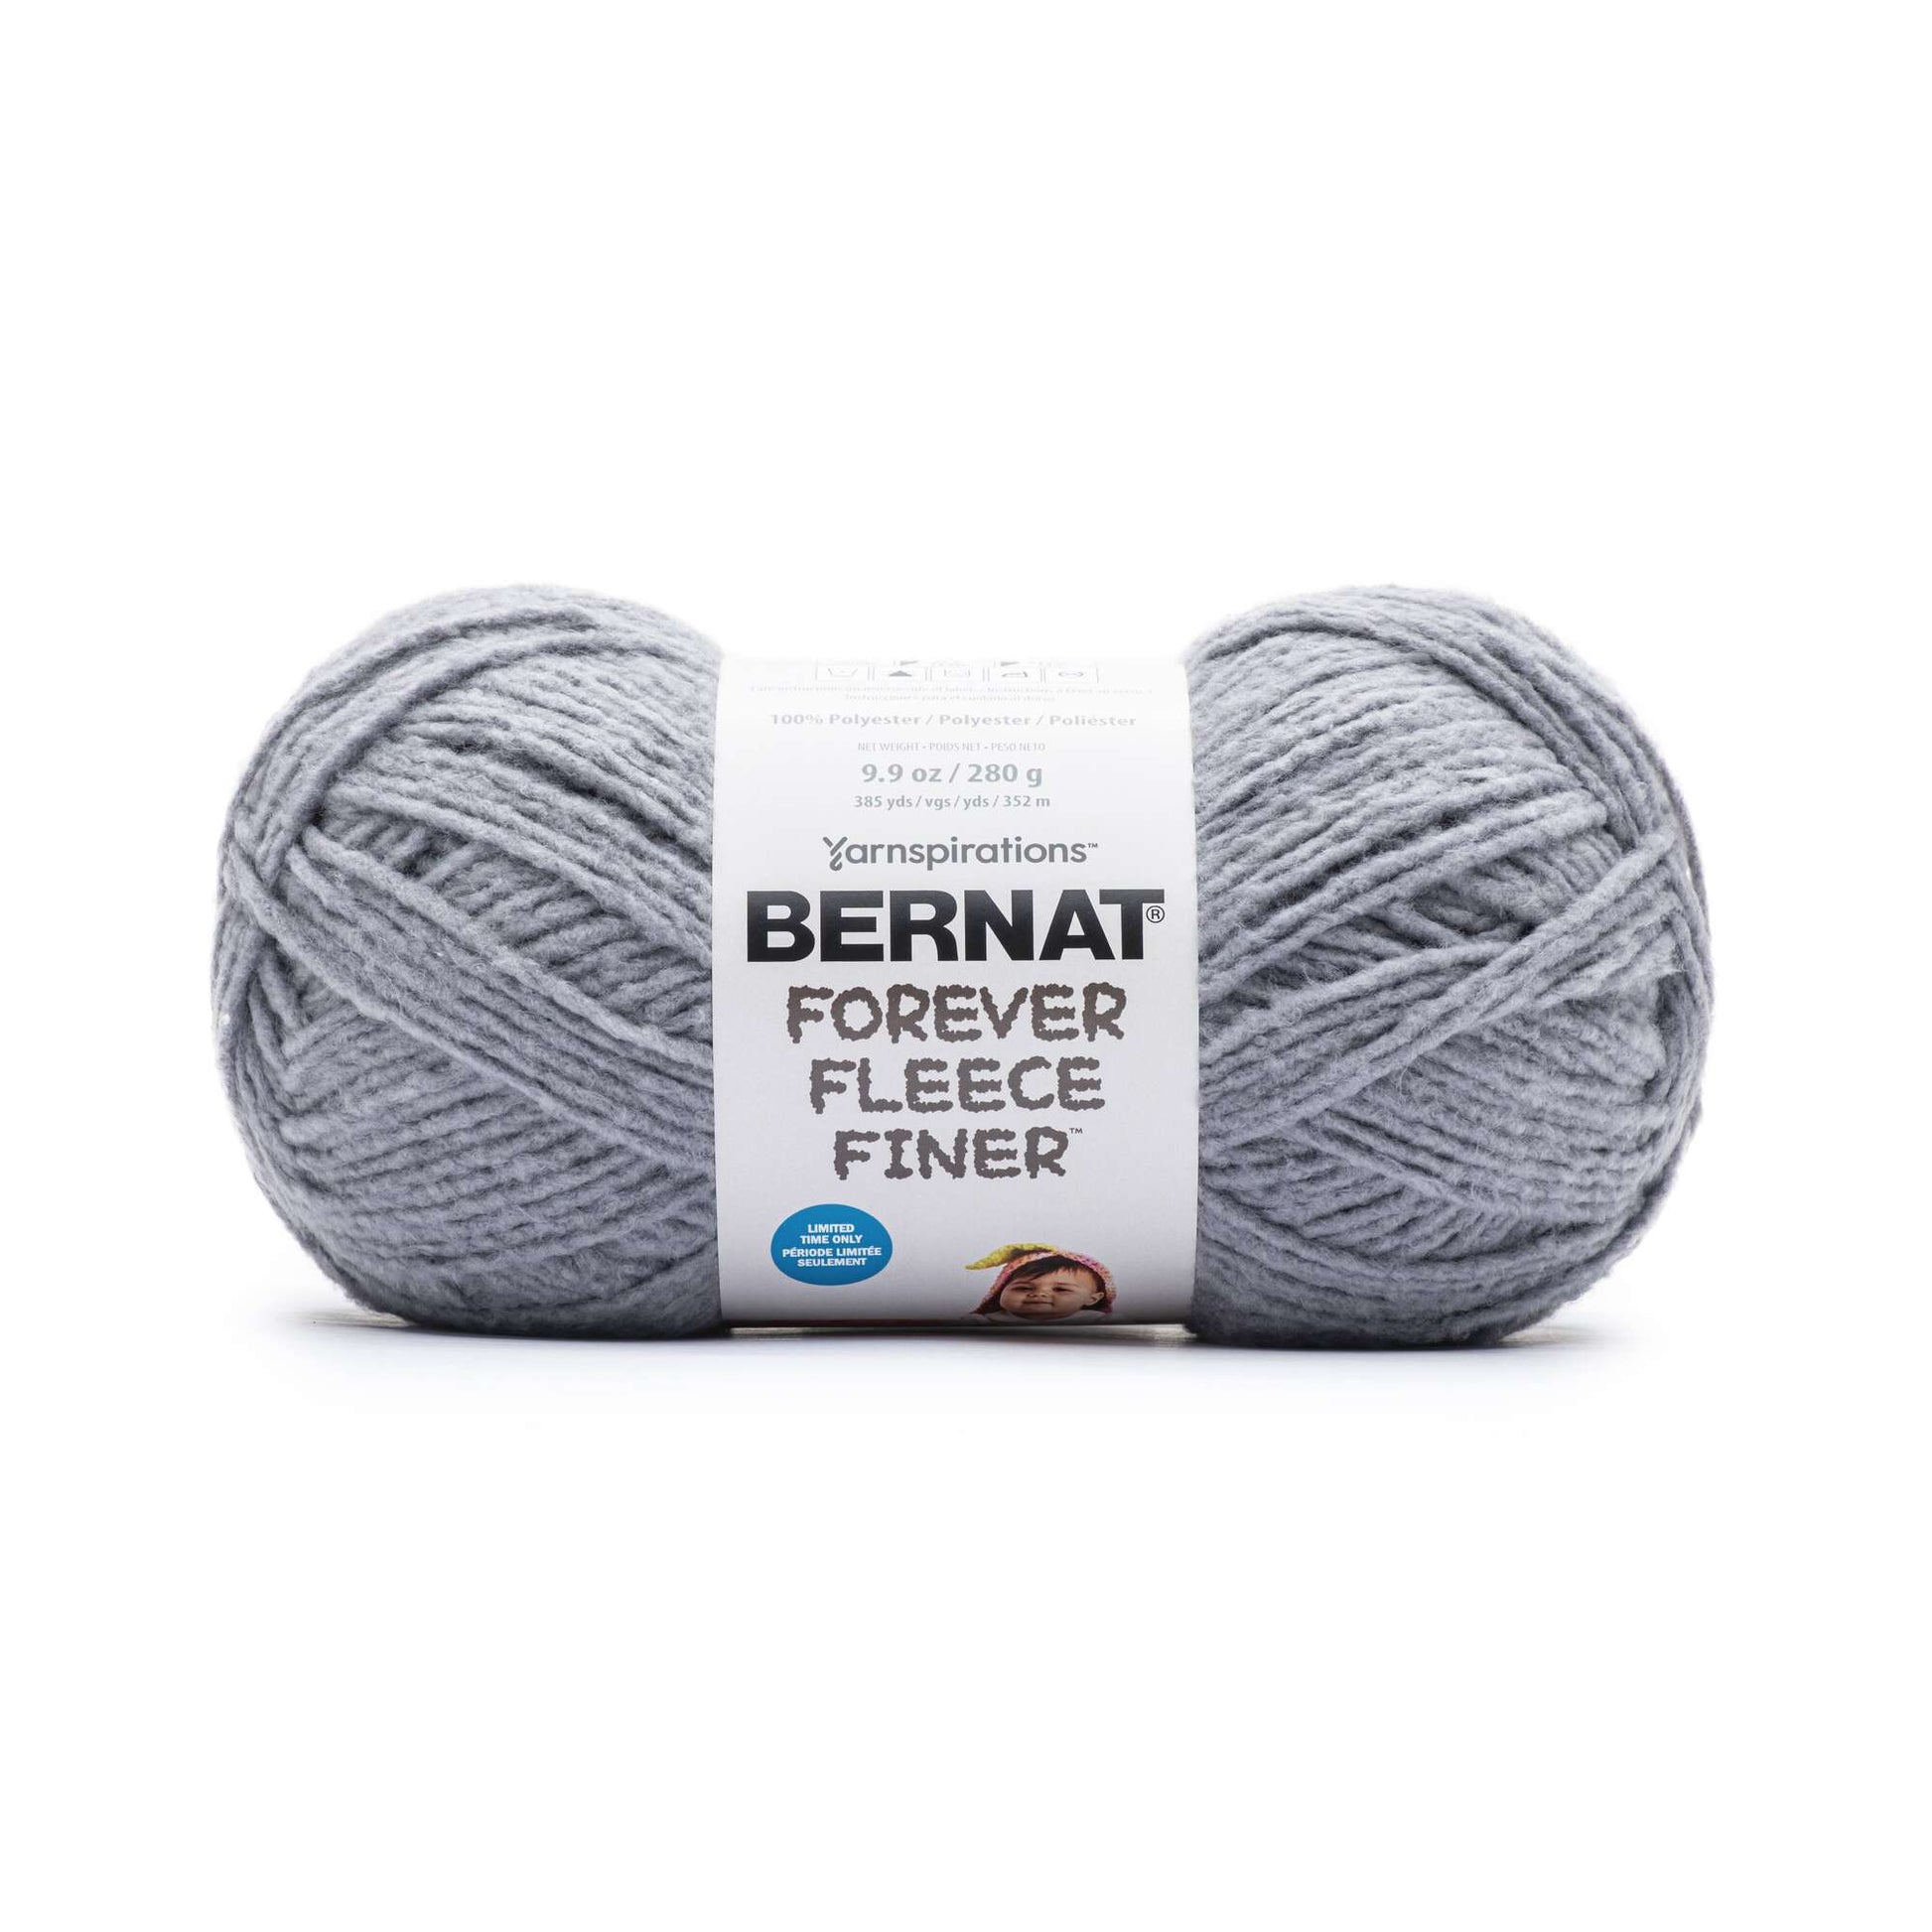 Bernat Forever Fleece Finer Yarn - Discontinued Shades